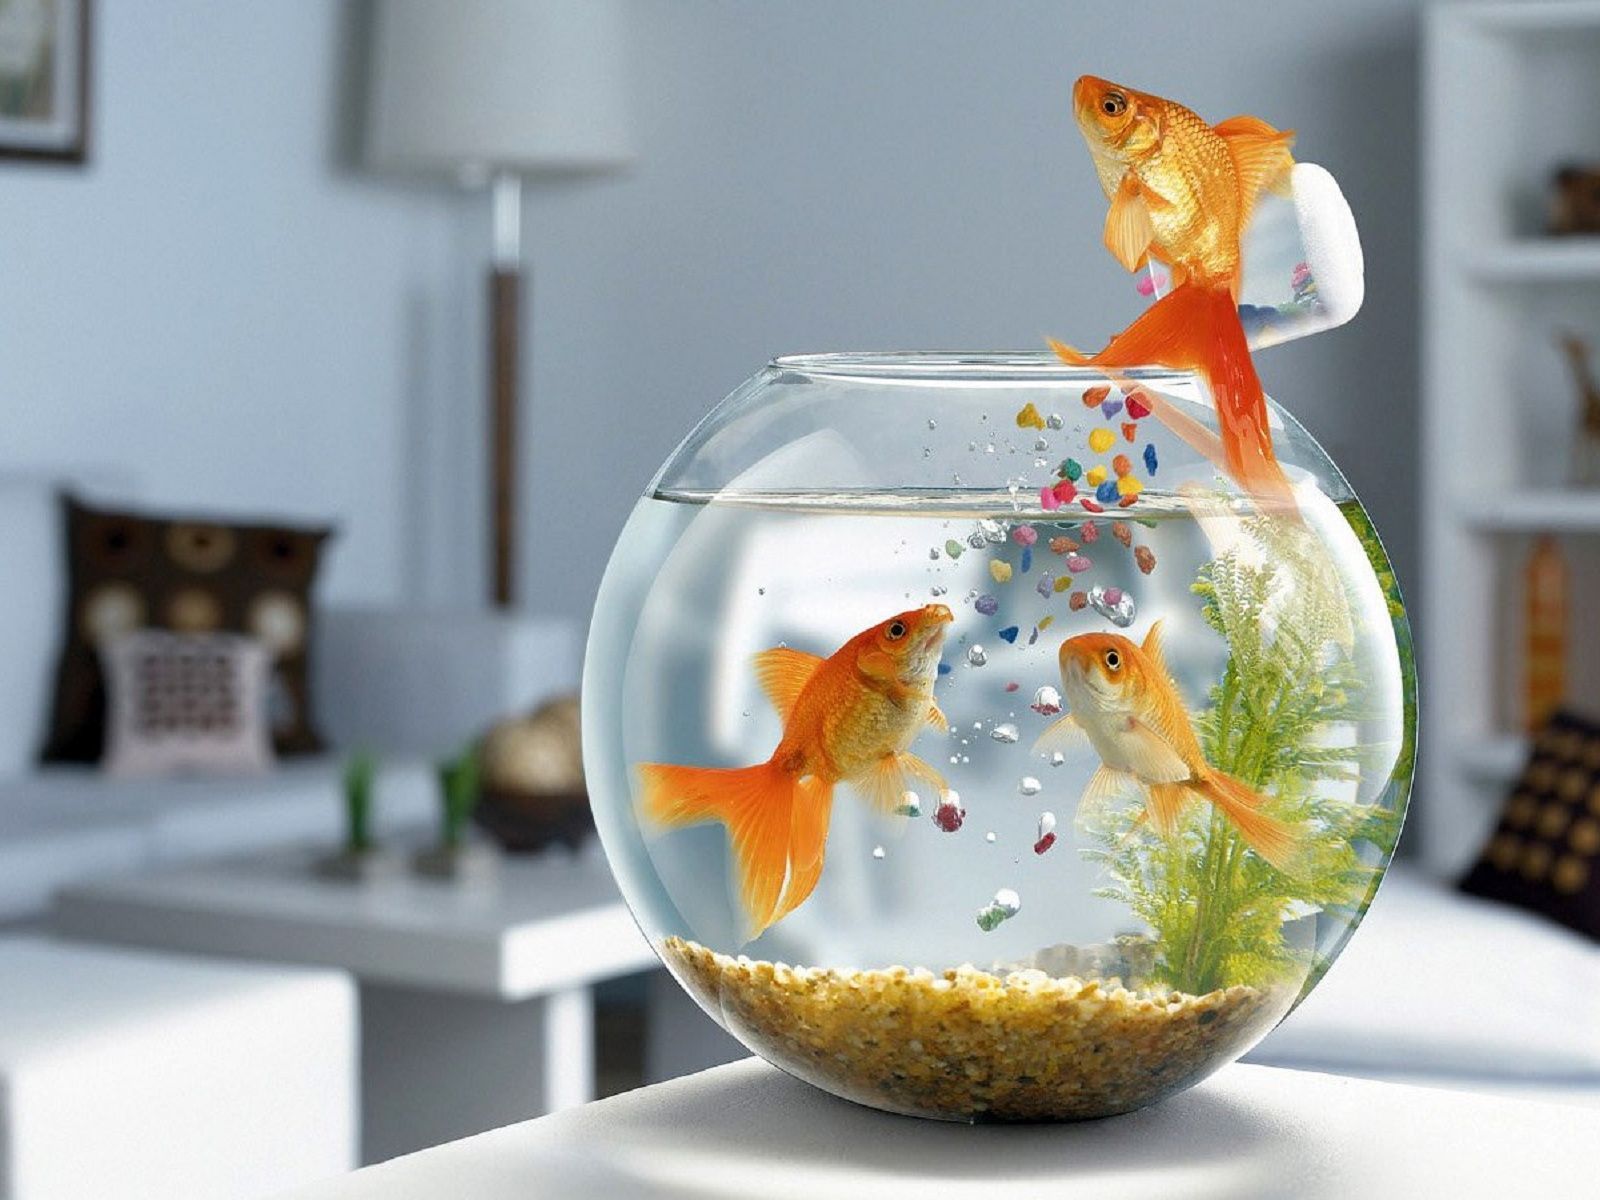 3D Fish Desktop Wallpapers